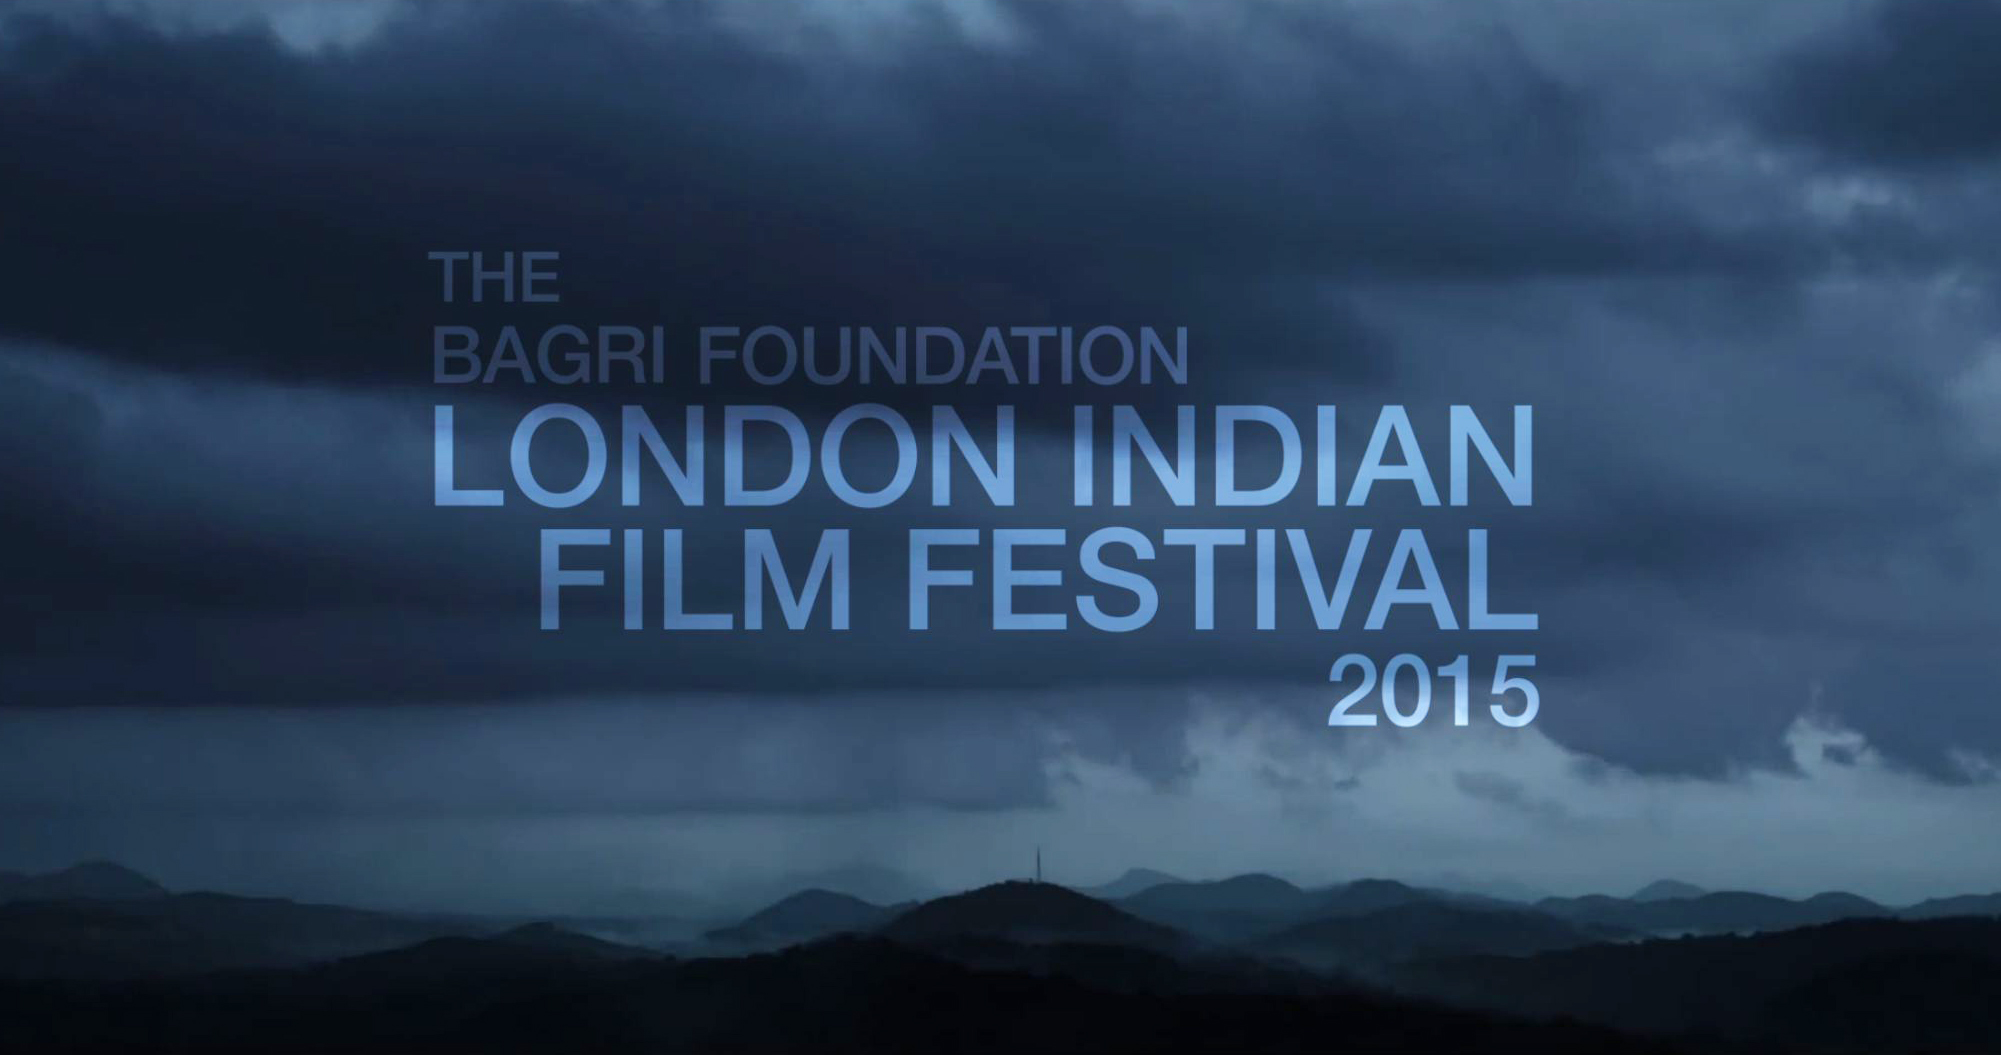 London Indian Film Festival 2015 Programme Trailer